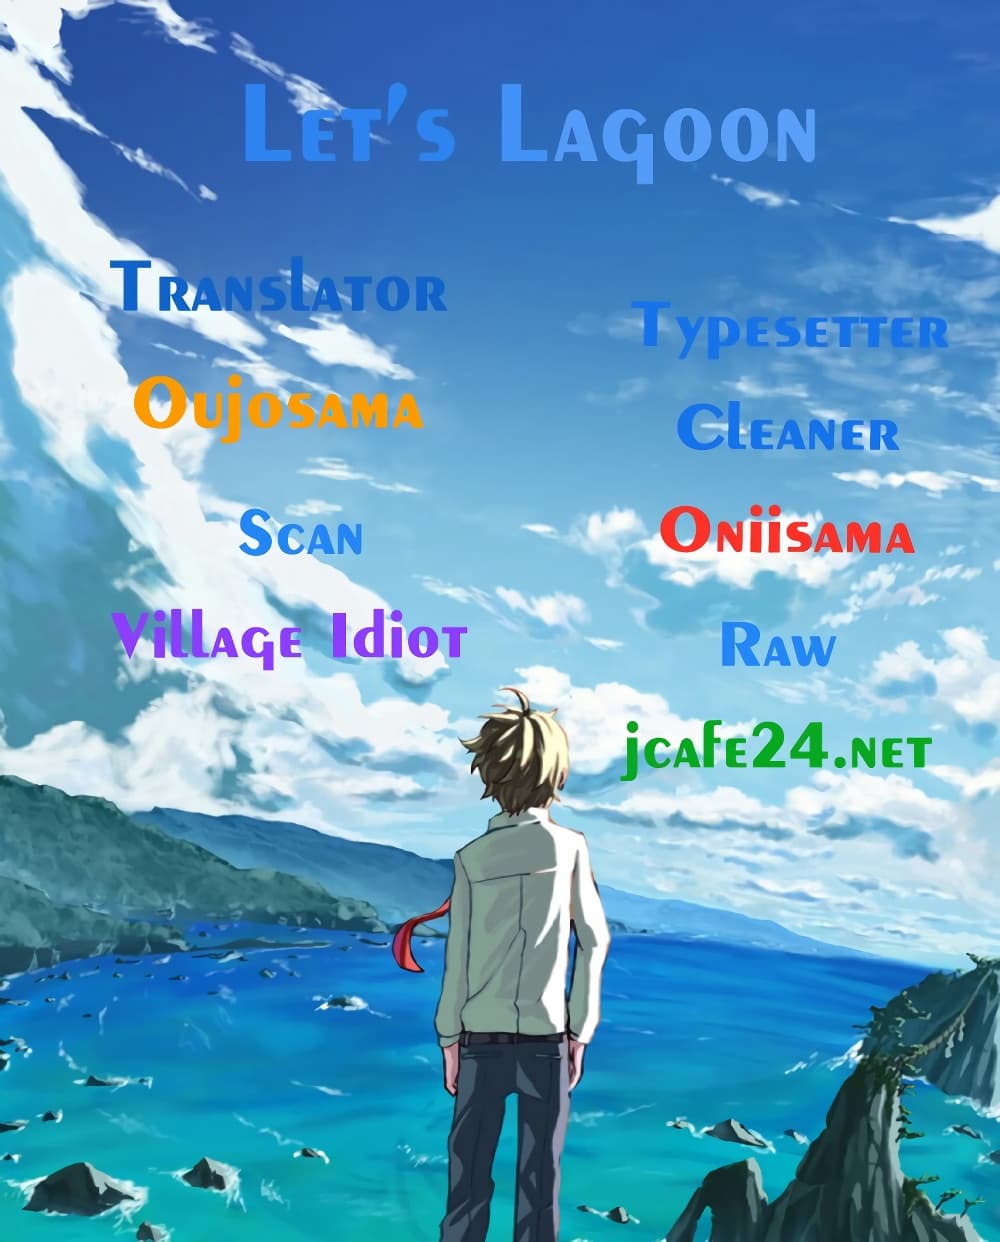 Let's Lagoon 19-19